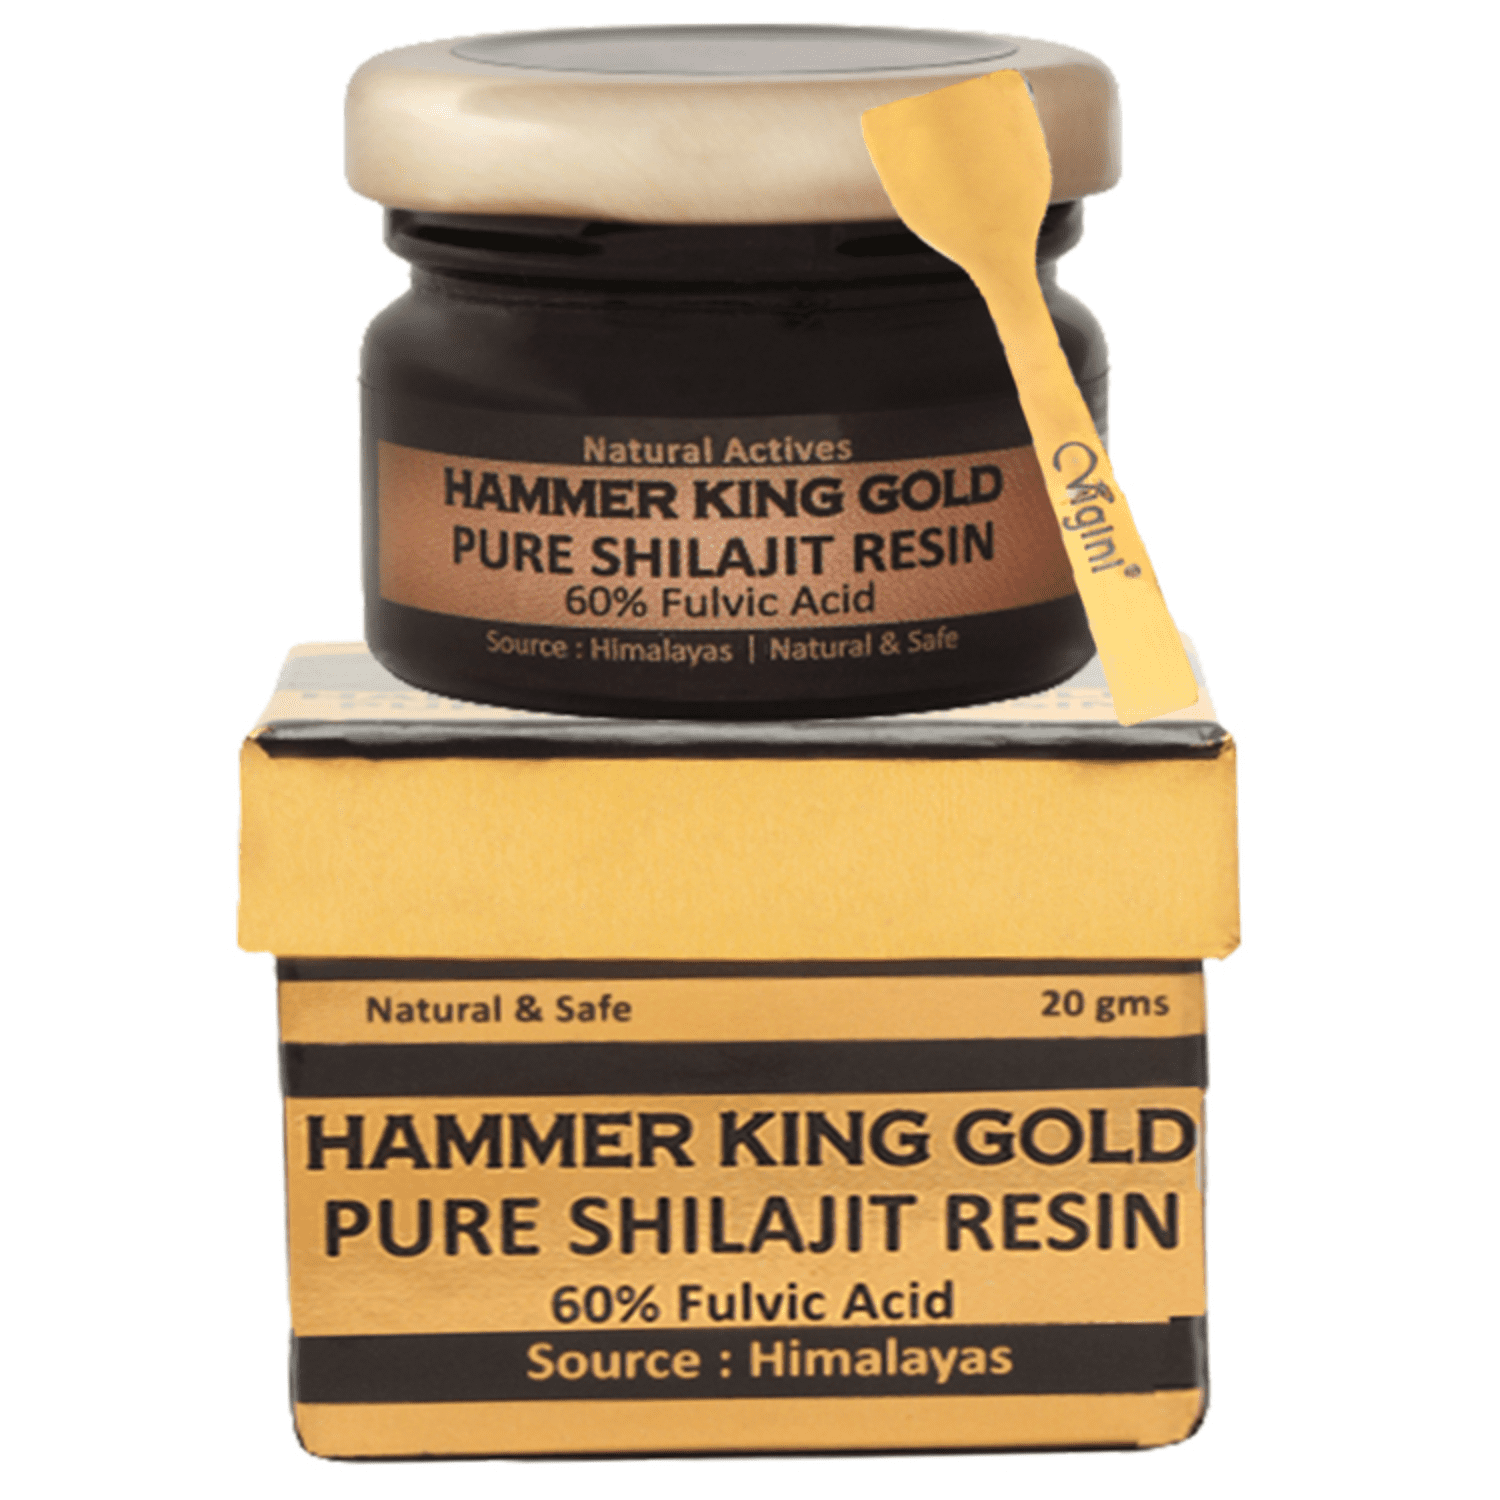 Hammer King Gold Pure Shilajit Resin